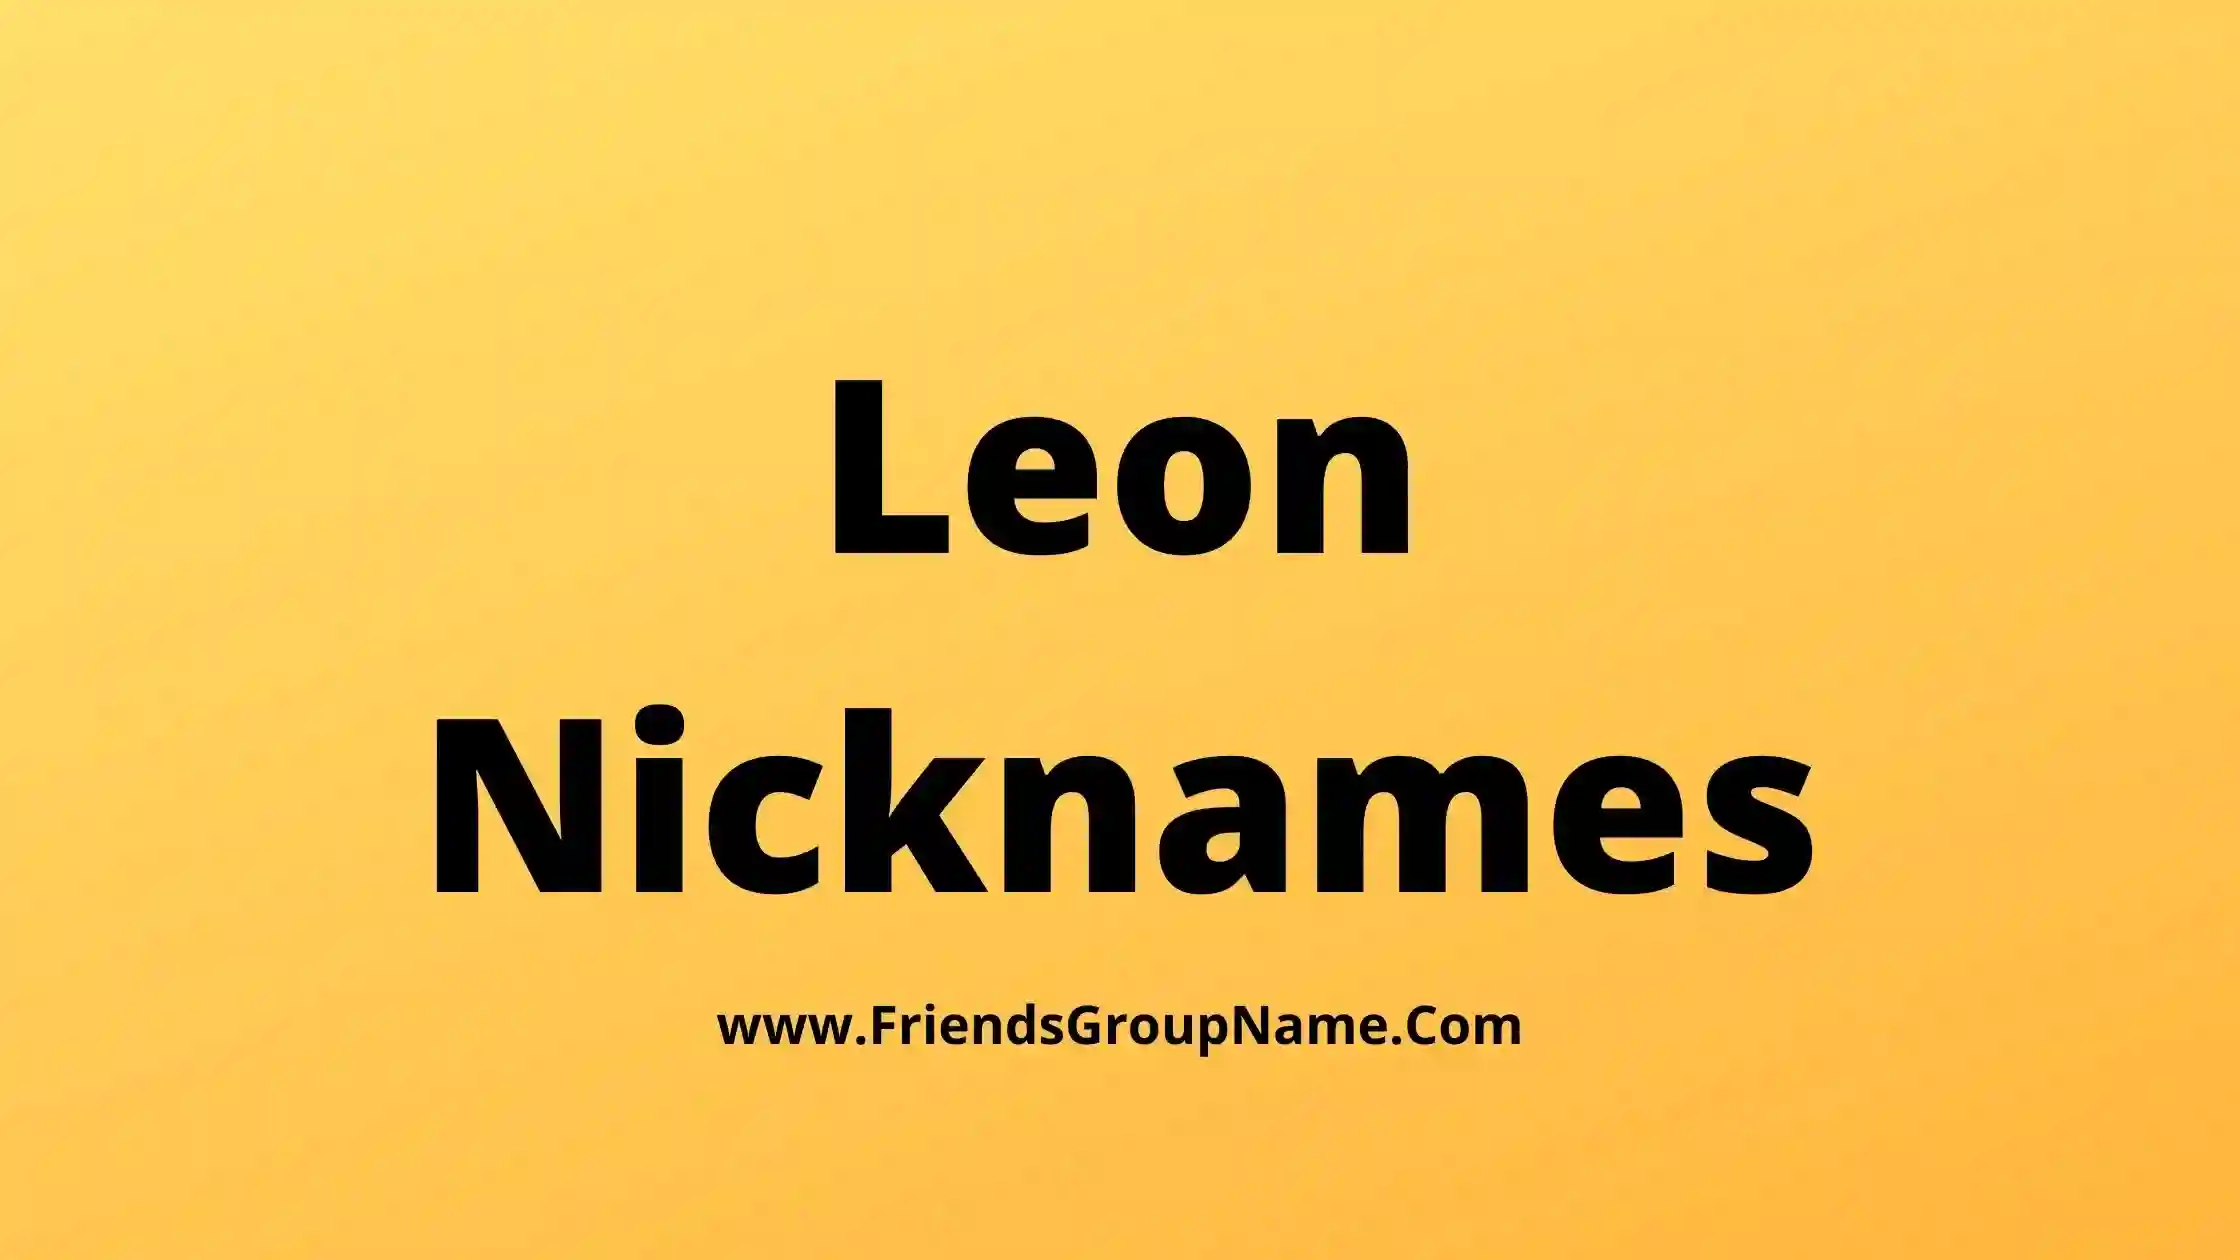 Leon Nicknames